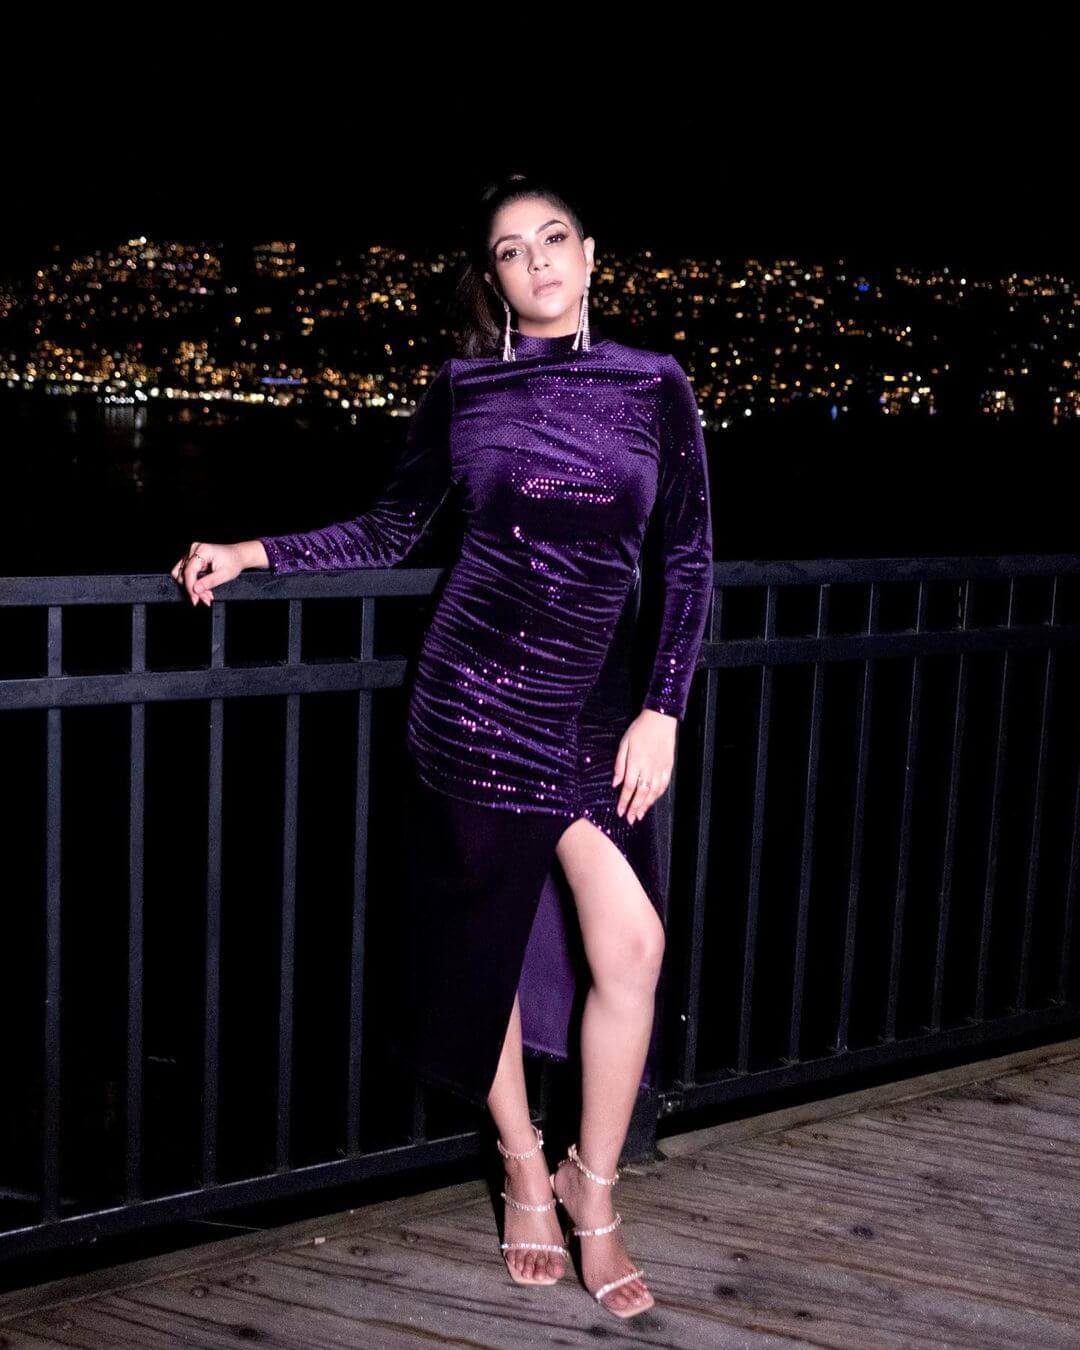 Diljott Look Stunning In Purple Thigh Slit Bodycon Dress Diljott Simple And Elegant Outfit Look